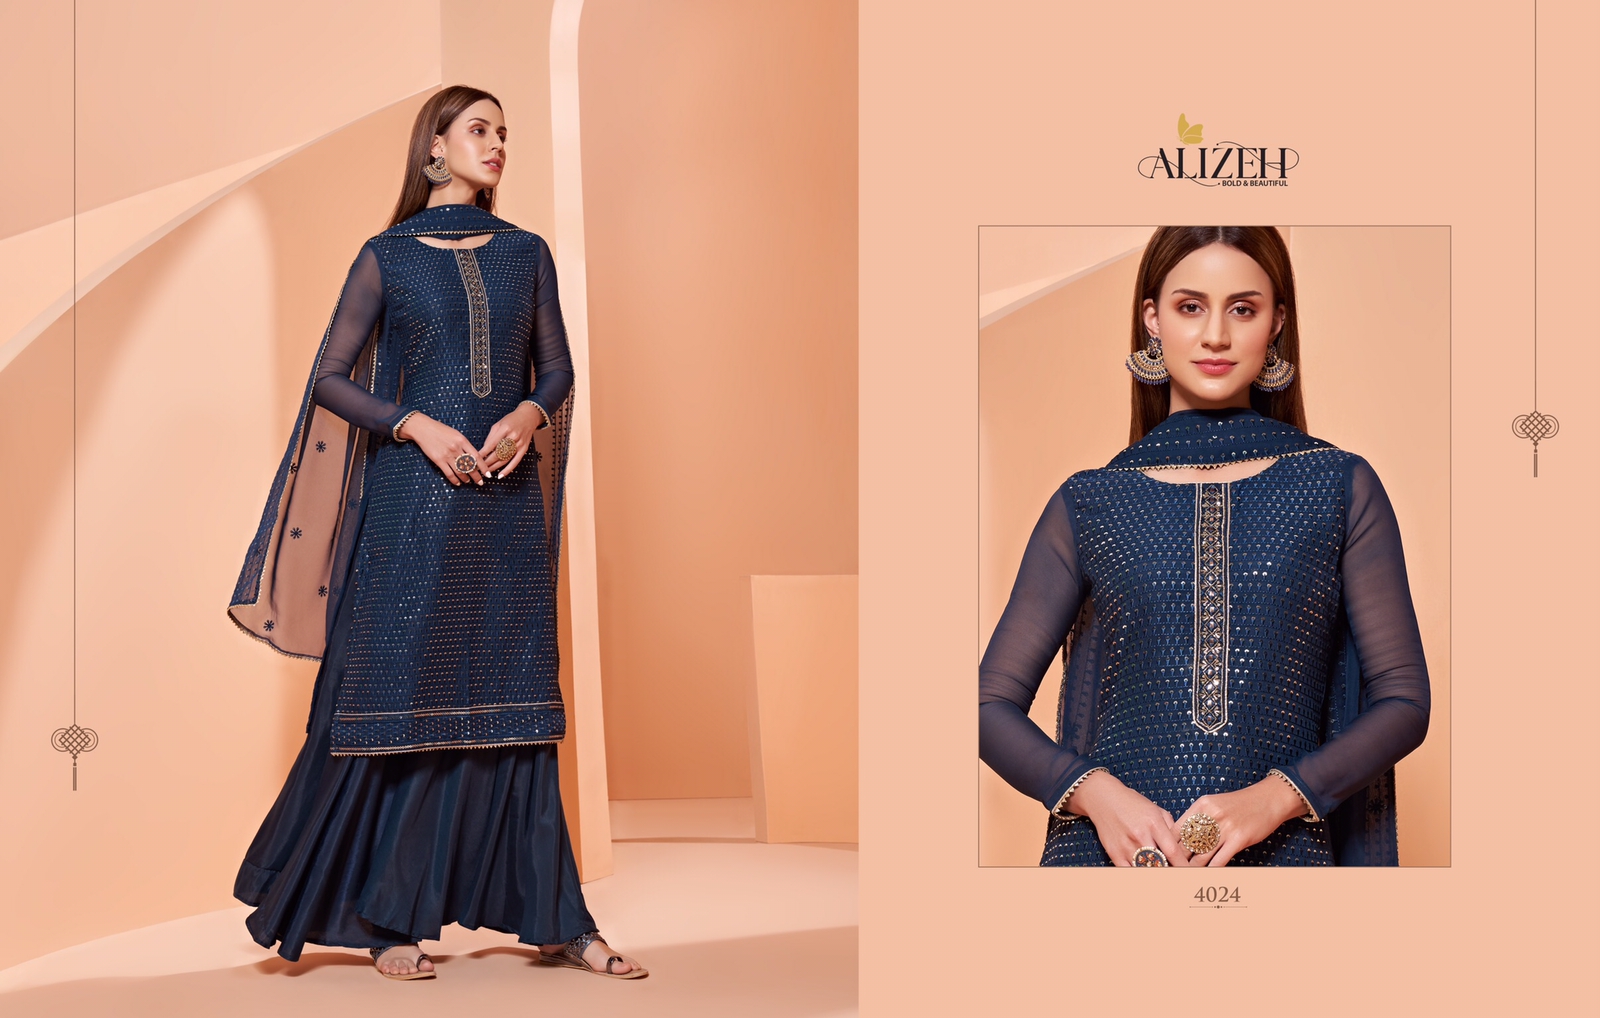 alizeh almora vol 5 georgette regal look salwar suit catalog